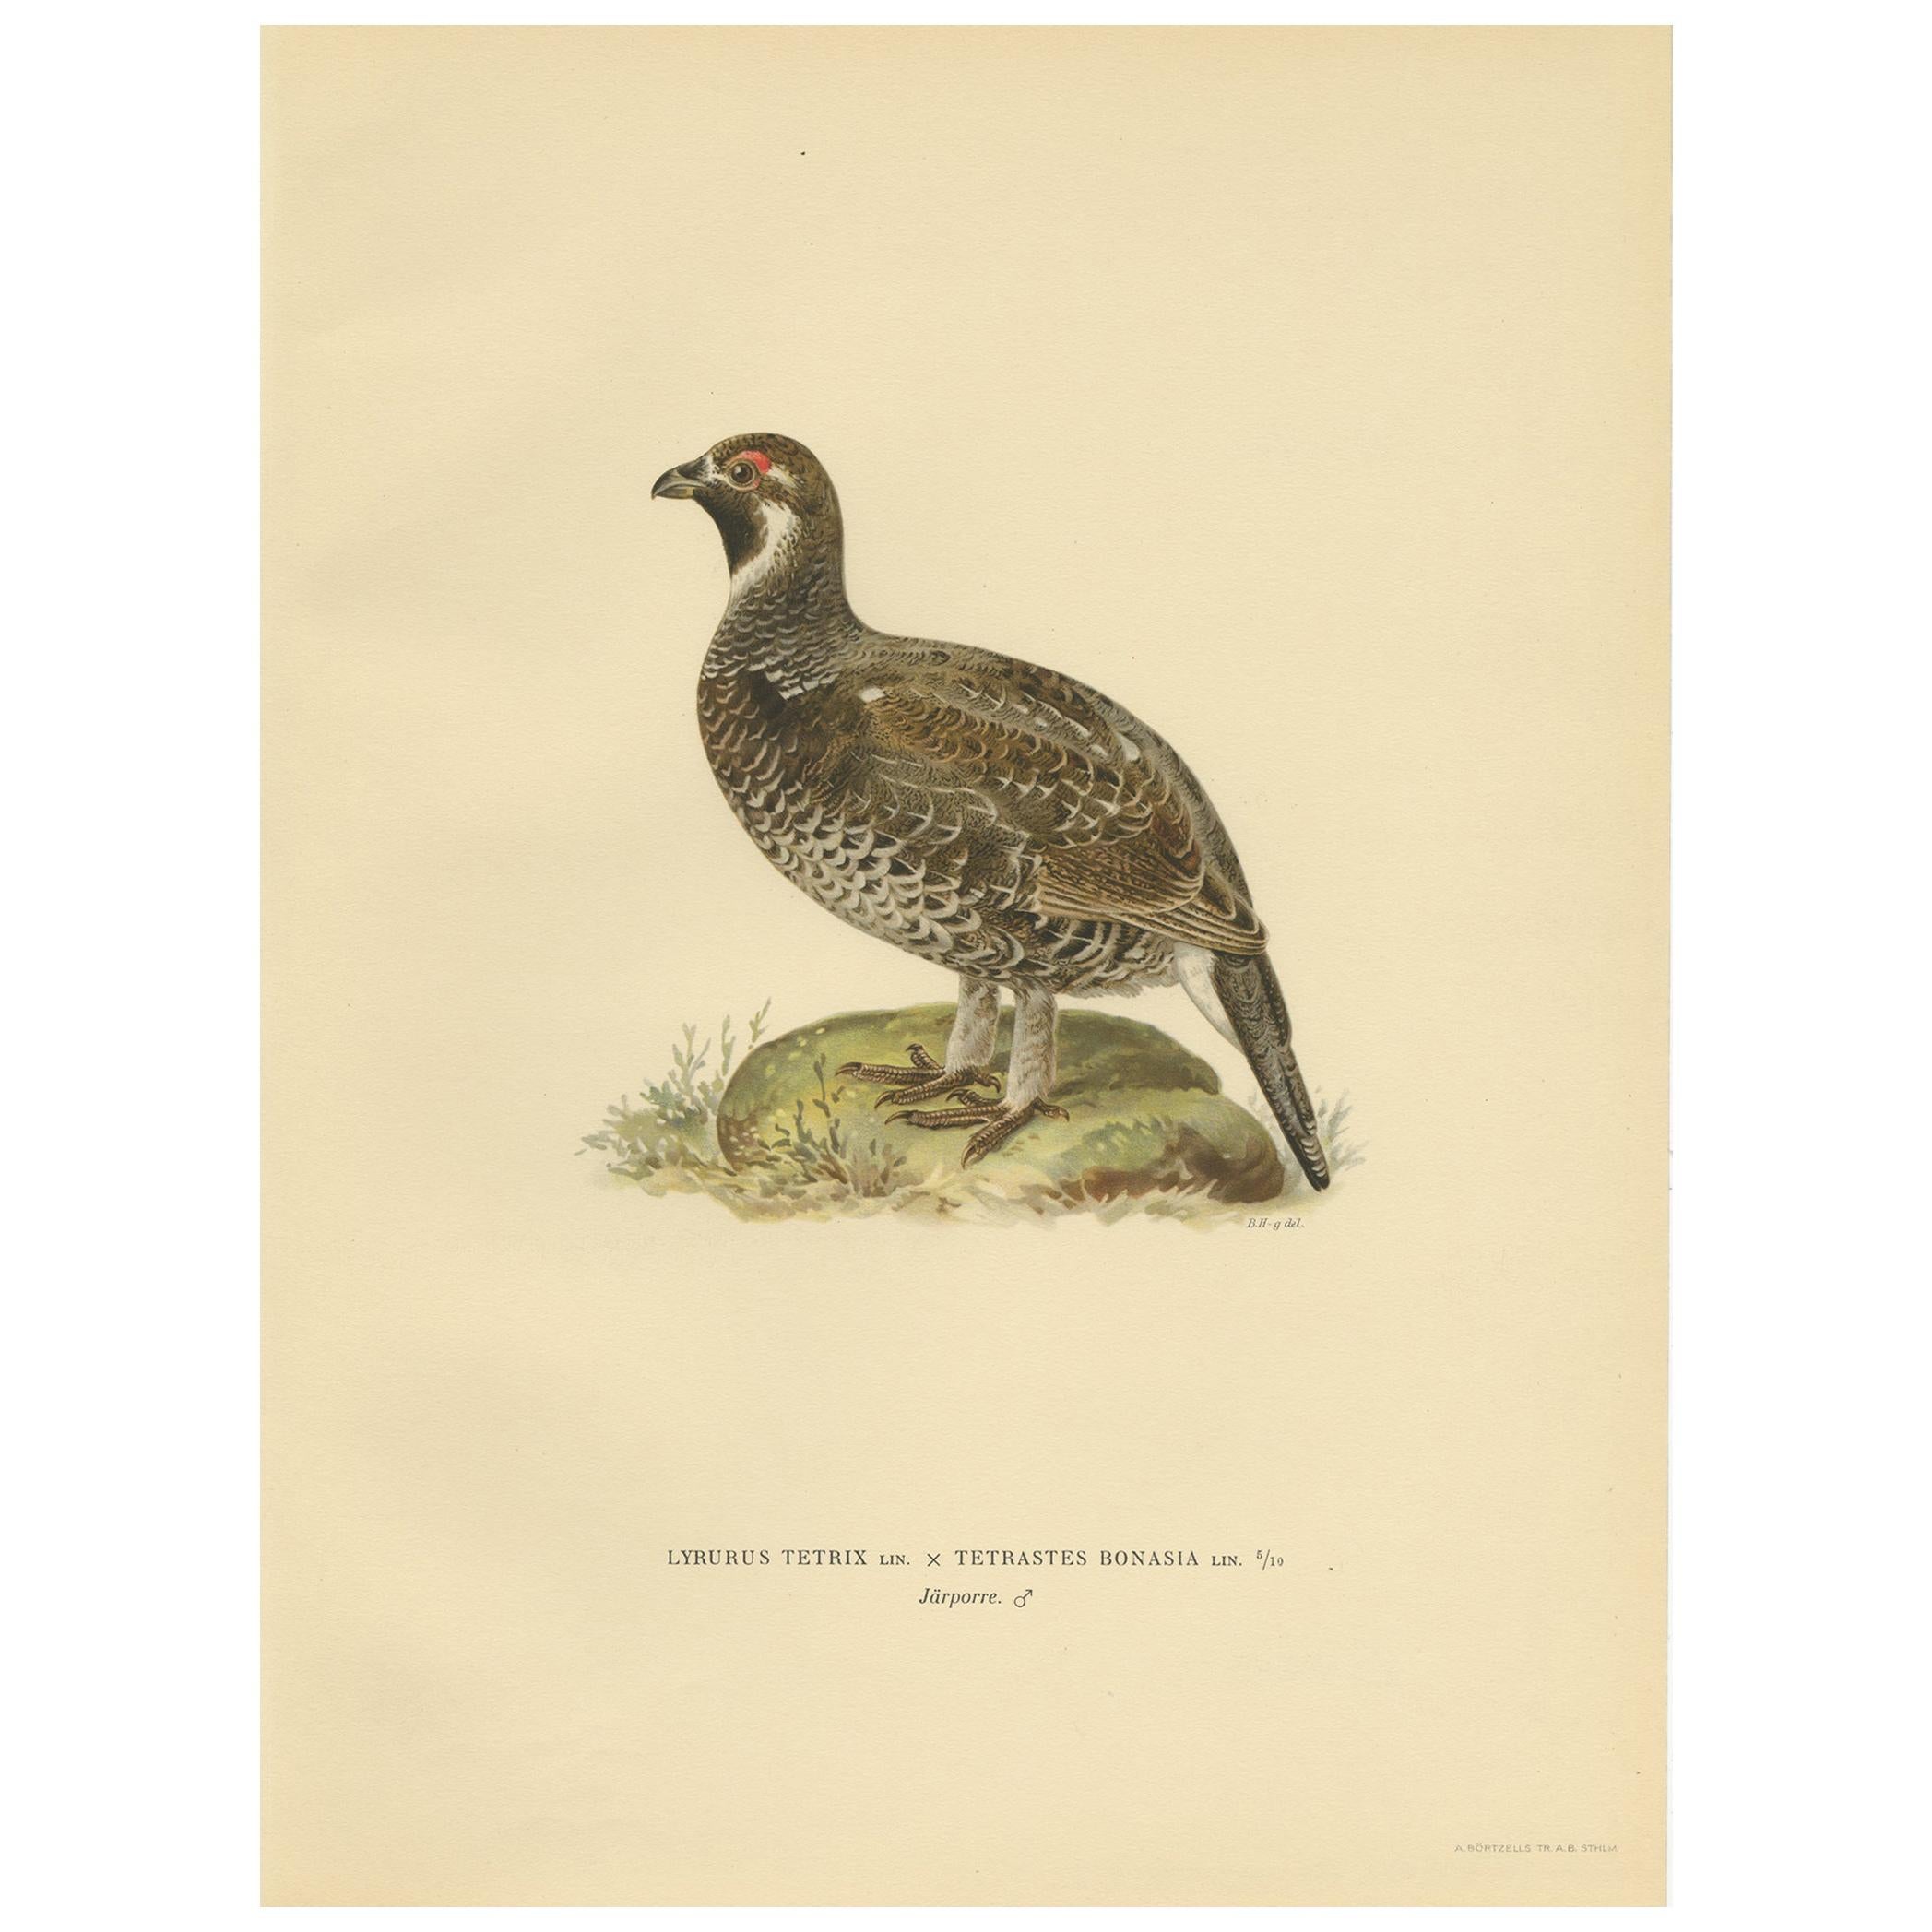 Antique Bird Print of the Black Grouse, 1929